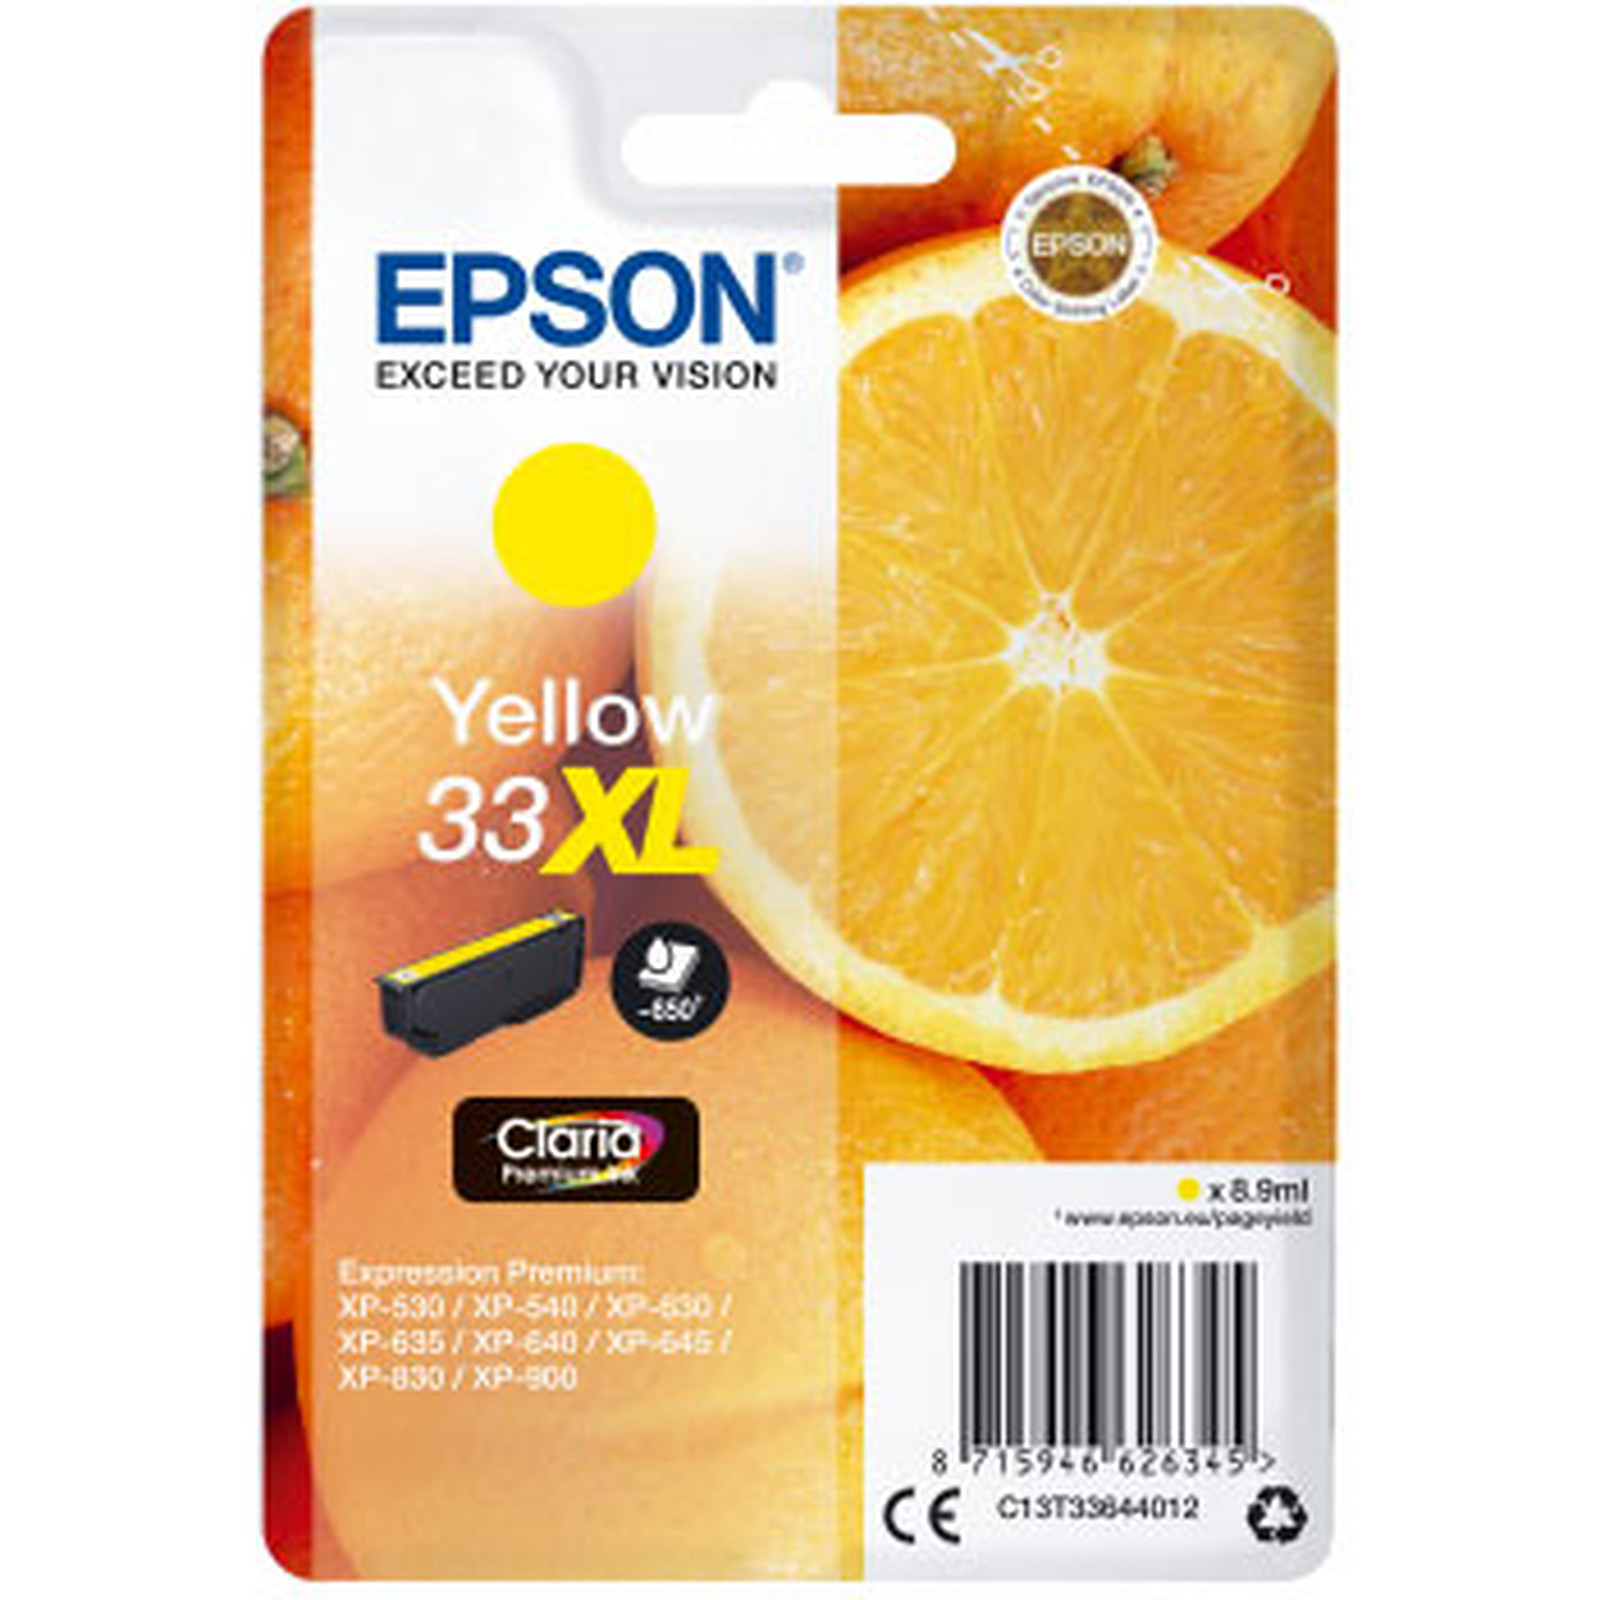 Epson Oranges 33 XL Jaune - Cartouche imprimante Epson